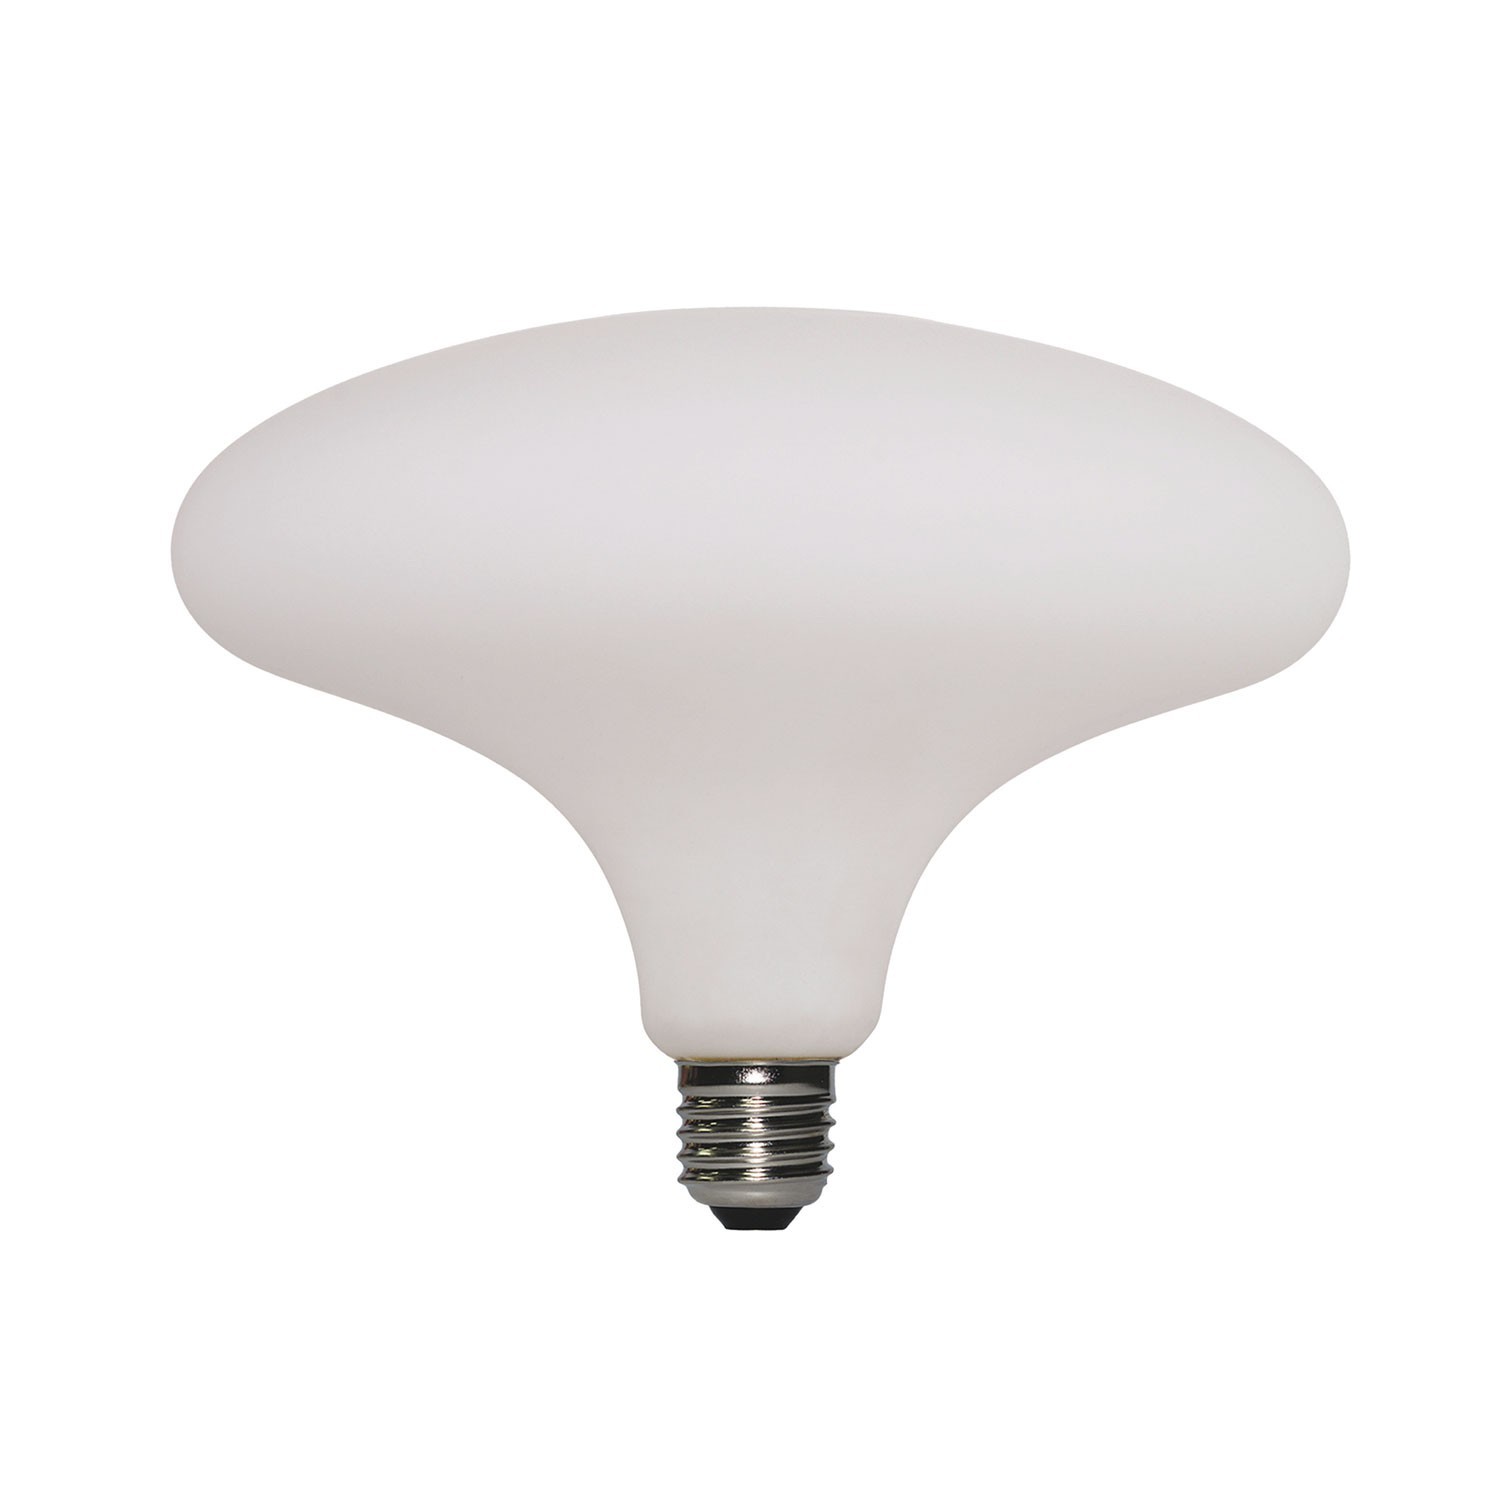 LED Porcelain Light Bulb Idra 6W 560Lm E27 2700K Dimmable